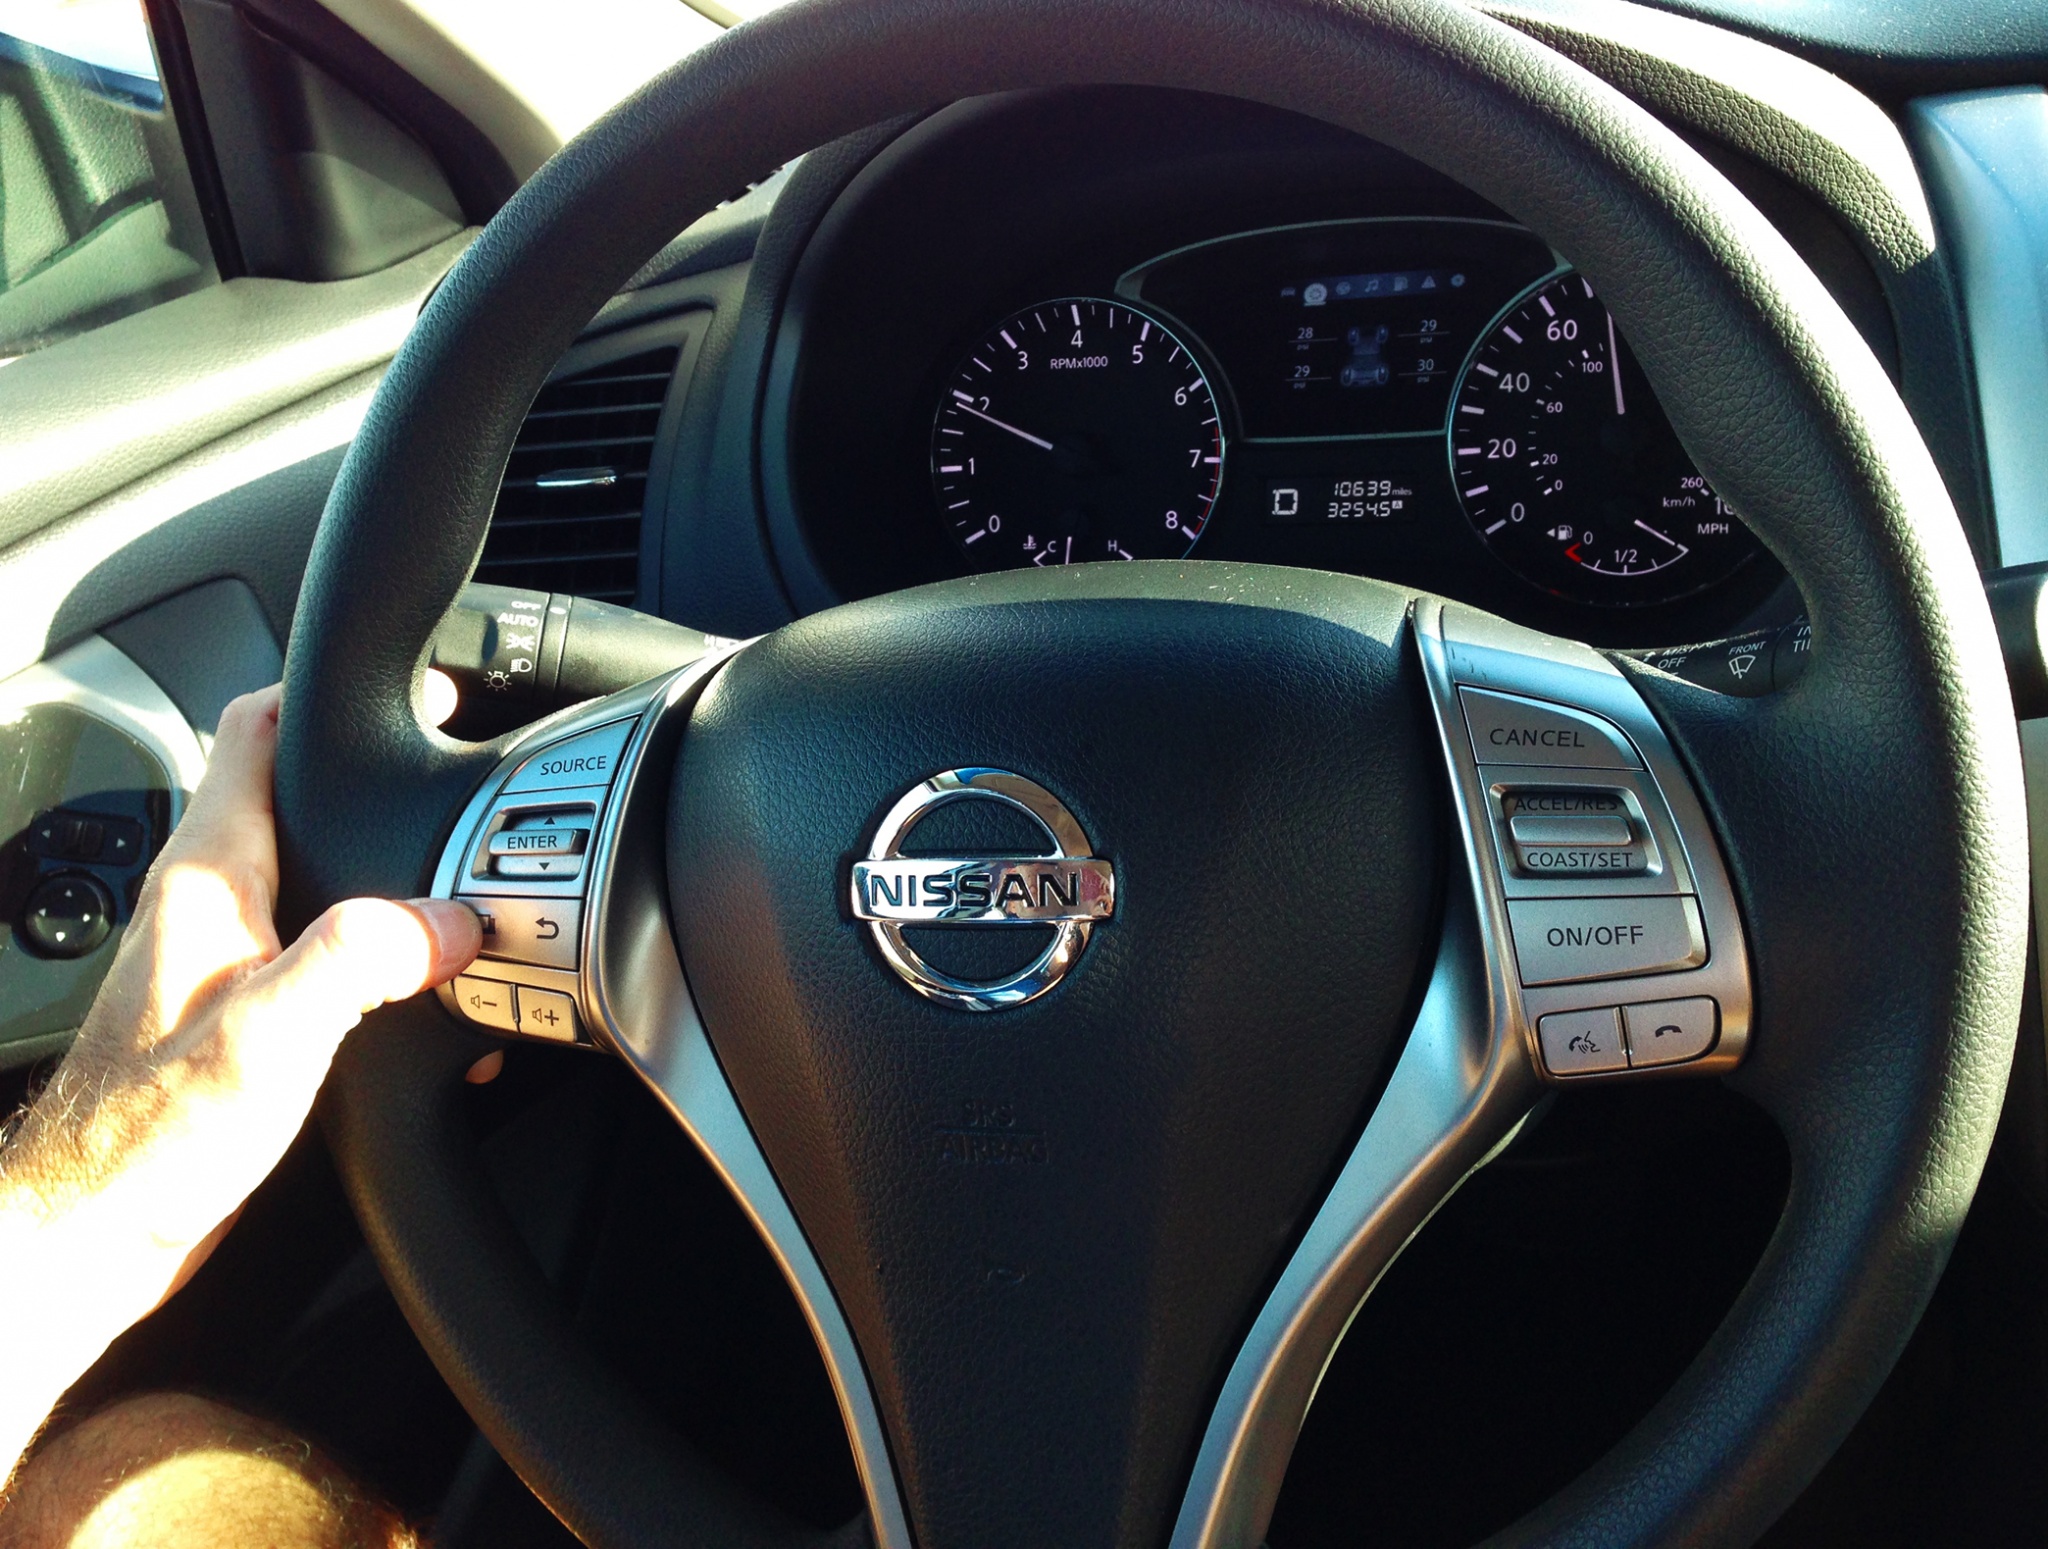 Nissan Altima steering wheel